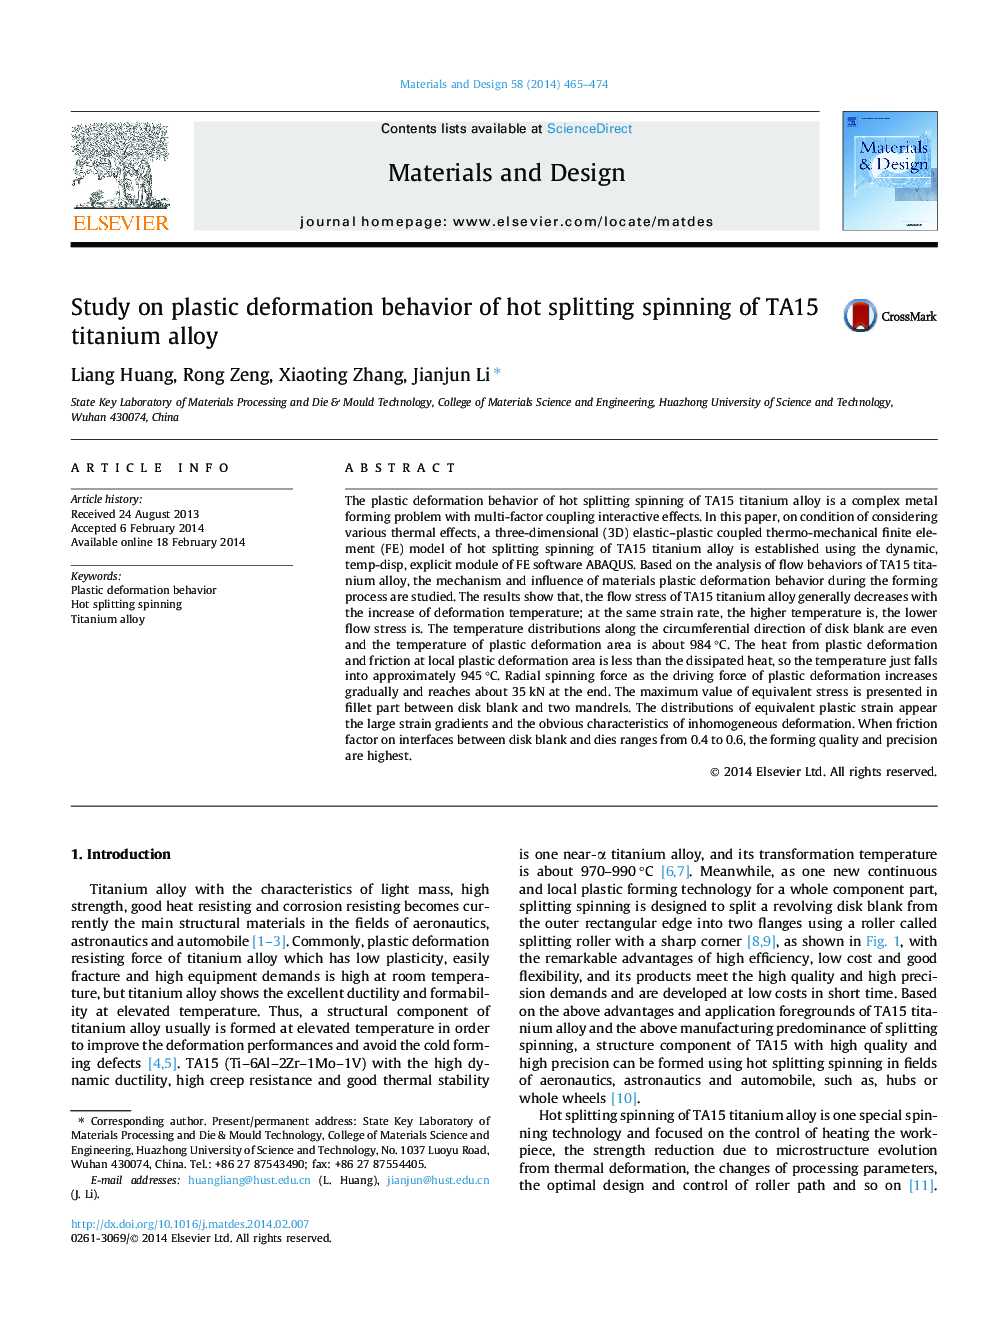 Study on plastic deformation behavior of hot splitting spinning of TA15 titanium alloy